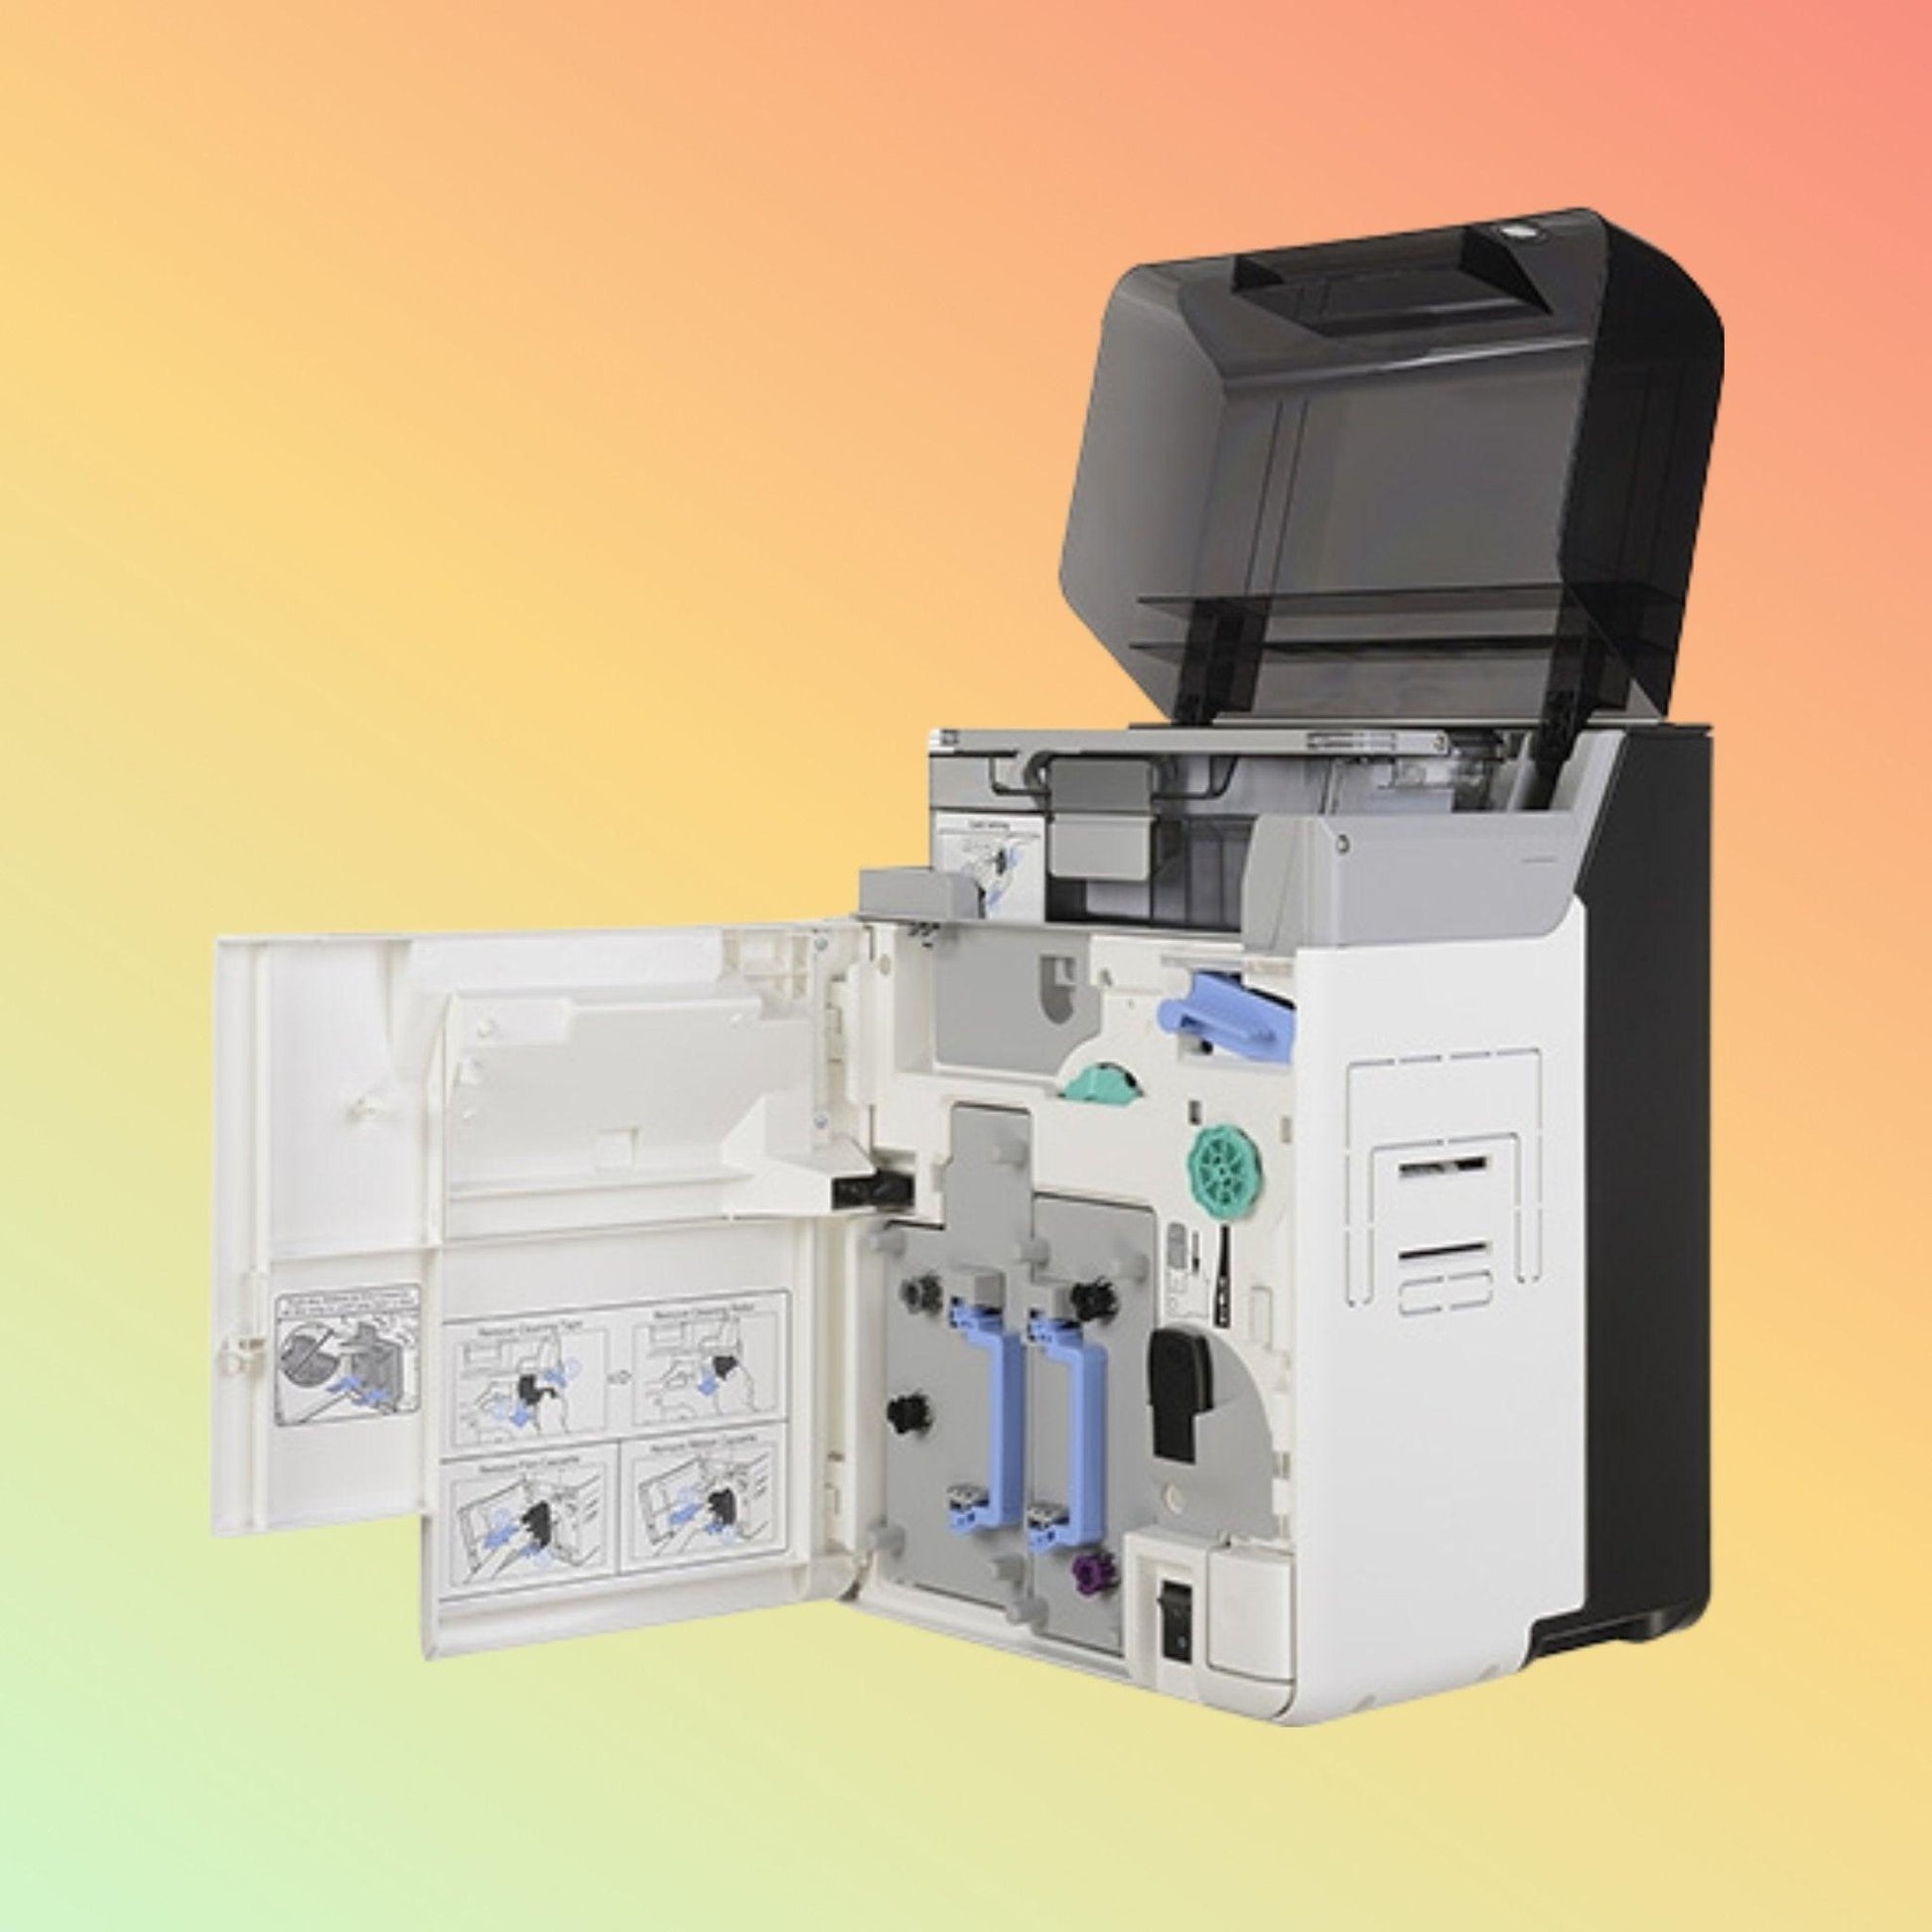 Idcard Printer - Evolis Avansia Card Printer-AV1H0000BD - Neotech